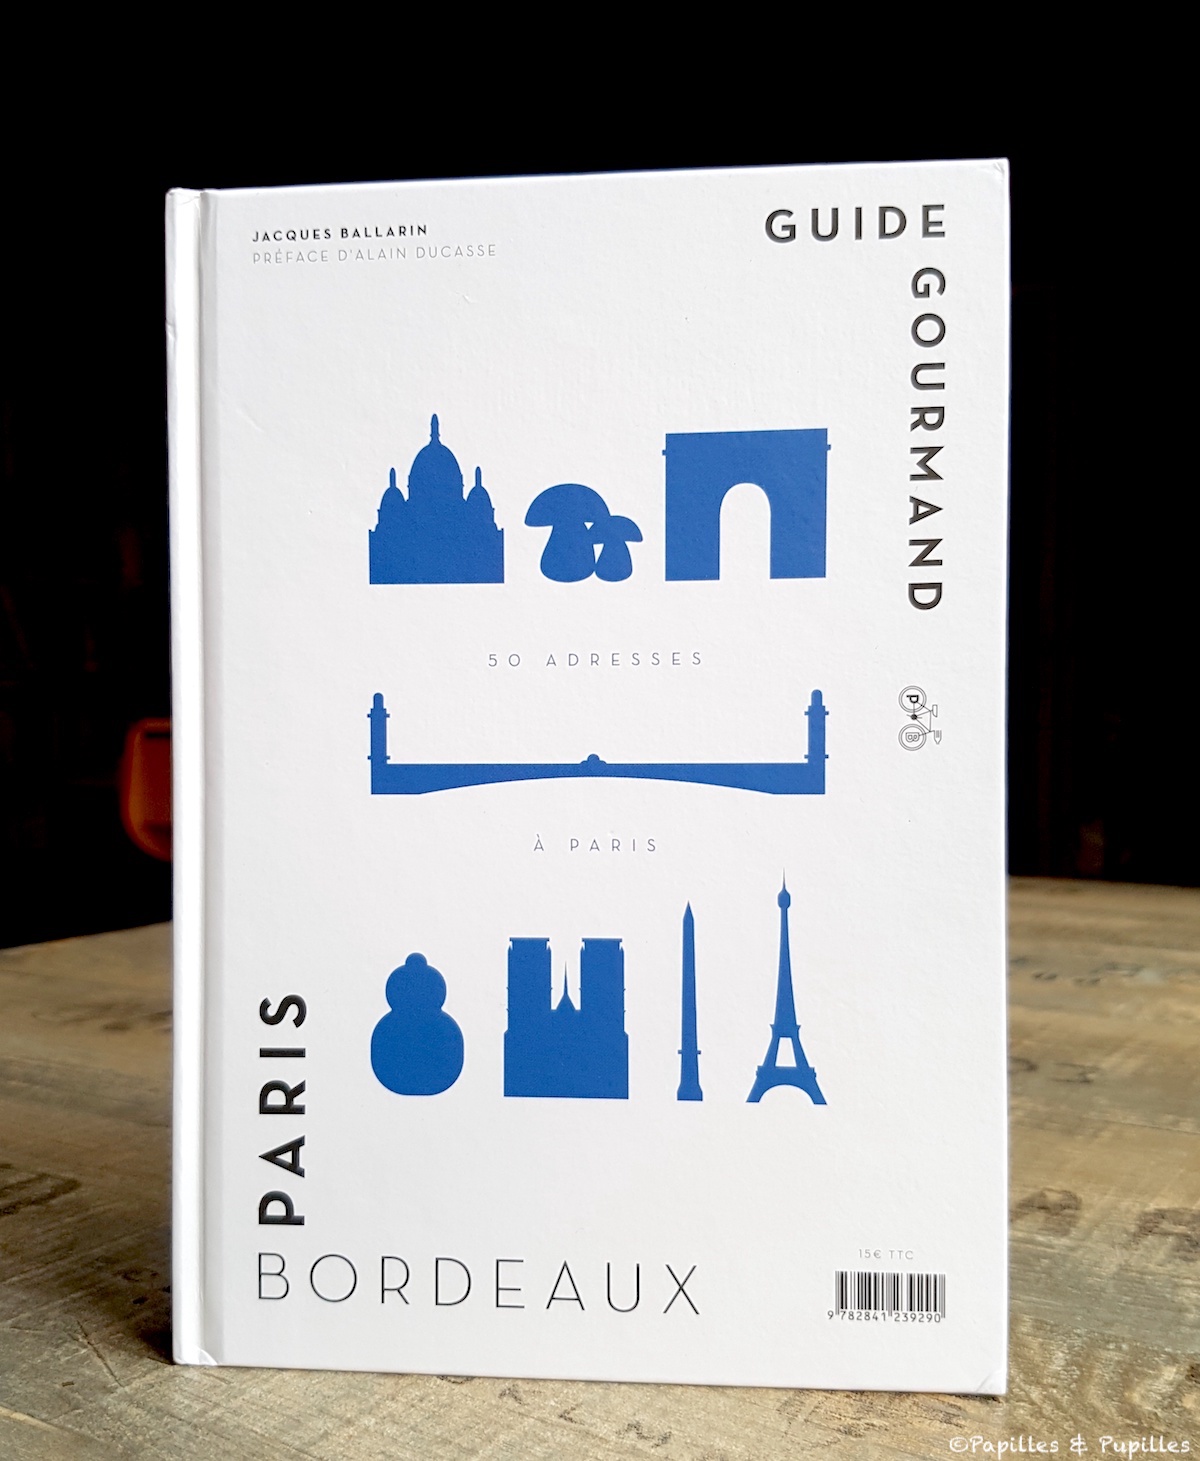 Guide Gourmand Paris Bordeaux - Jacques Ballarin